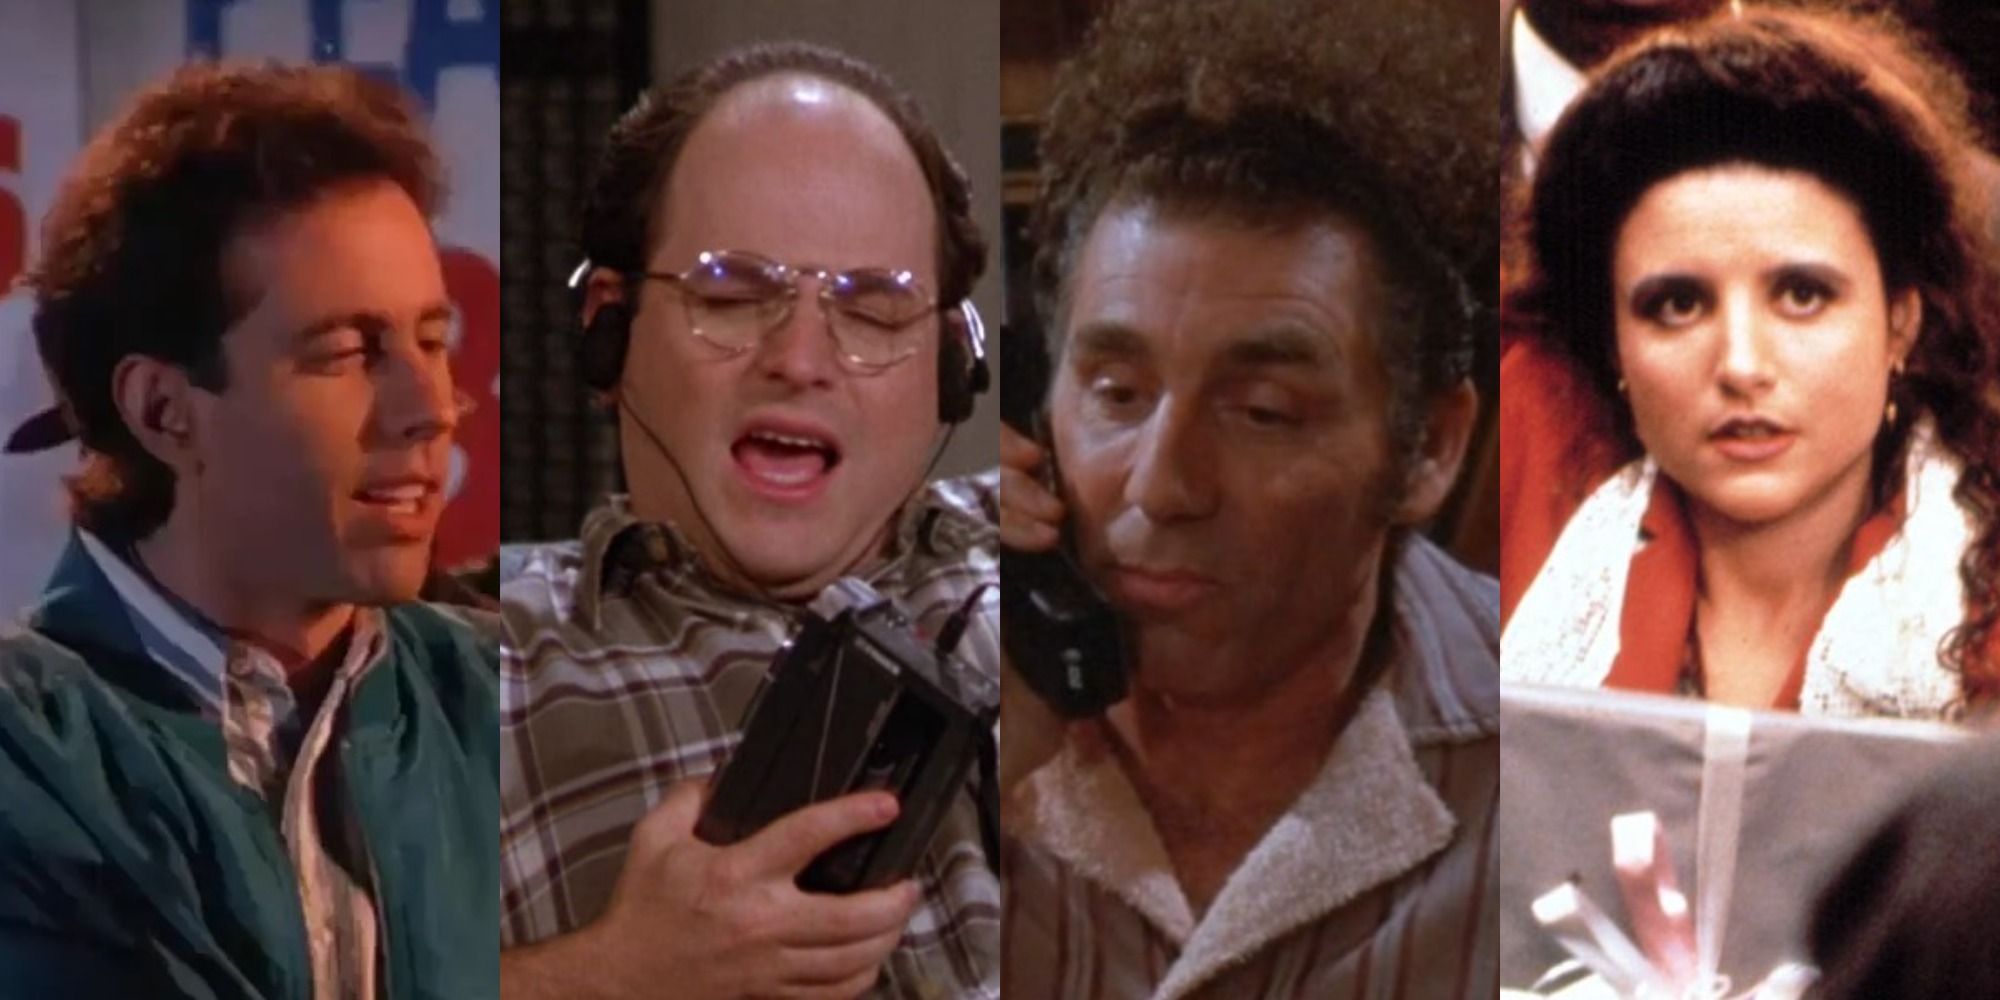 Seinfeld Characters — Jerry, George, Kramer, Elaine